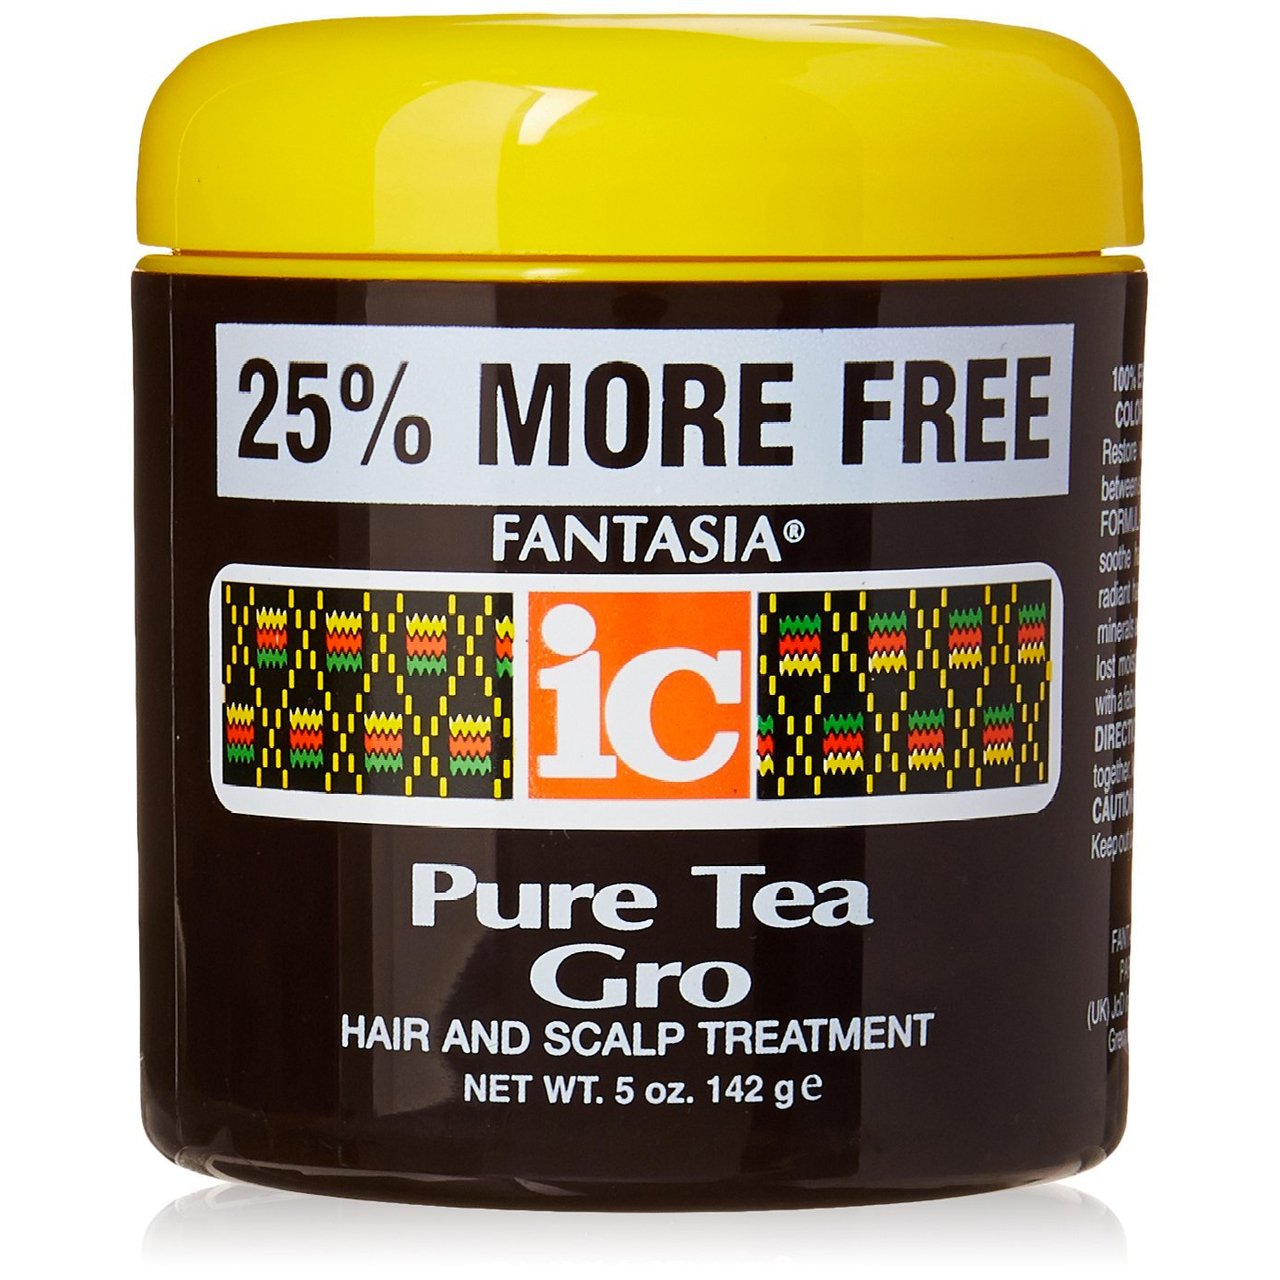 Fantasia: Pure Tea Gro Hair & Scalp Treatment